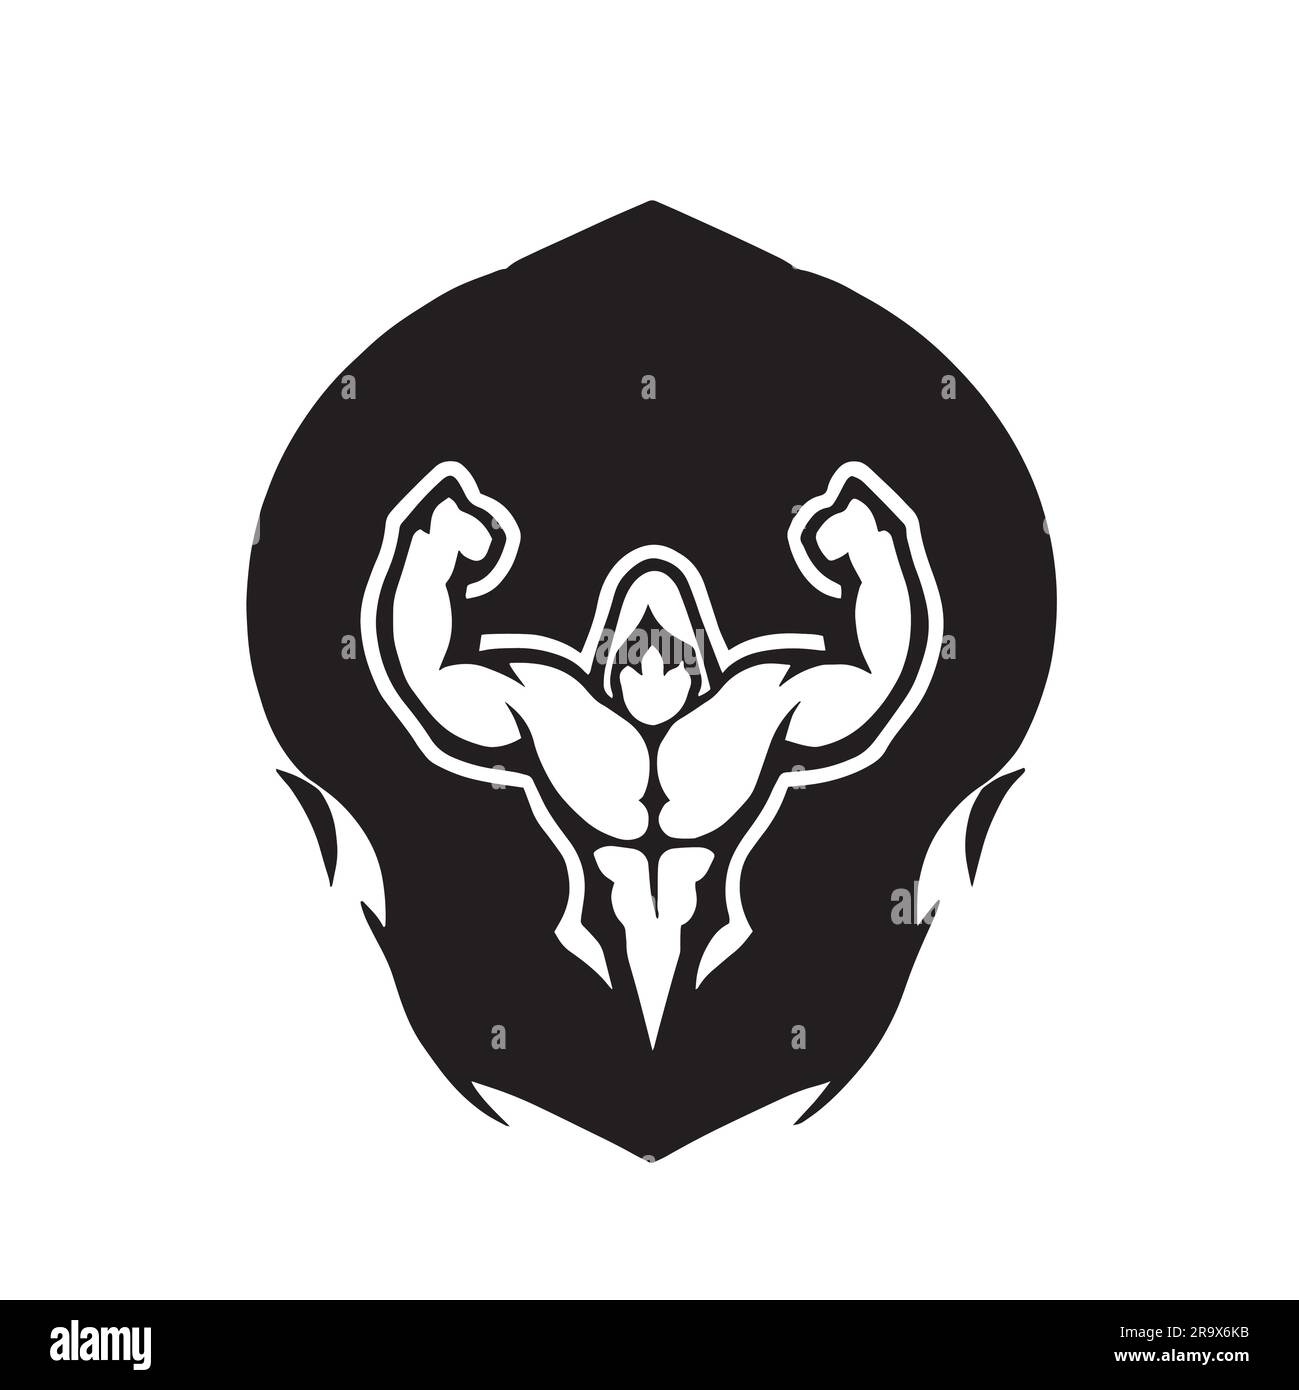 black and white bodybuilding logo illustration Stock Vector